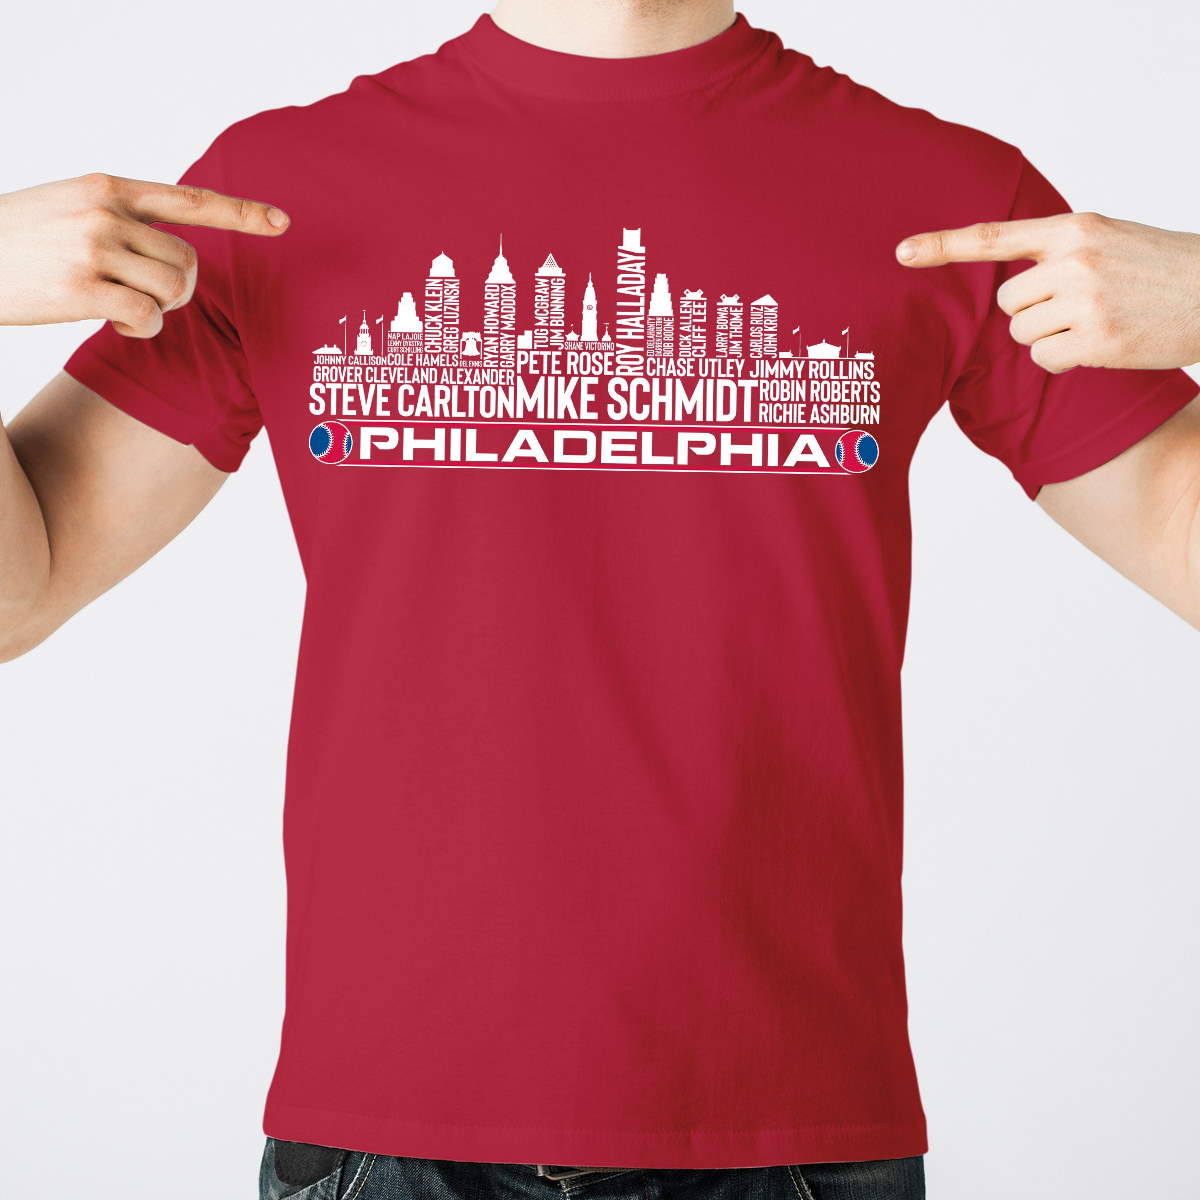 Schmidt & Carlton '80 - Philadelphia Baseball Legends Political Campaign Parody T-Shirt - Hyper Than Hype Shirts S / Red Shirt